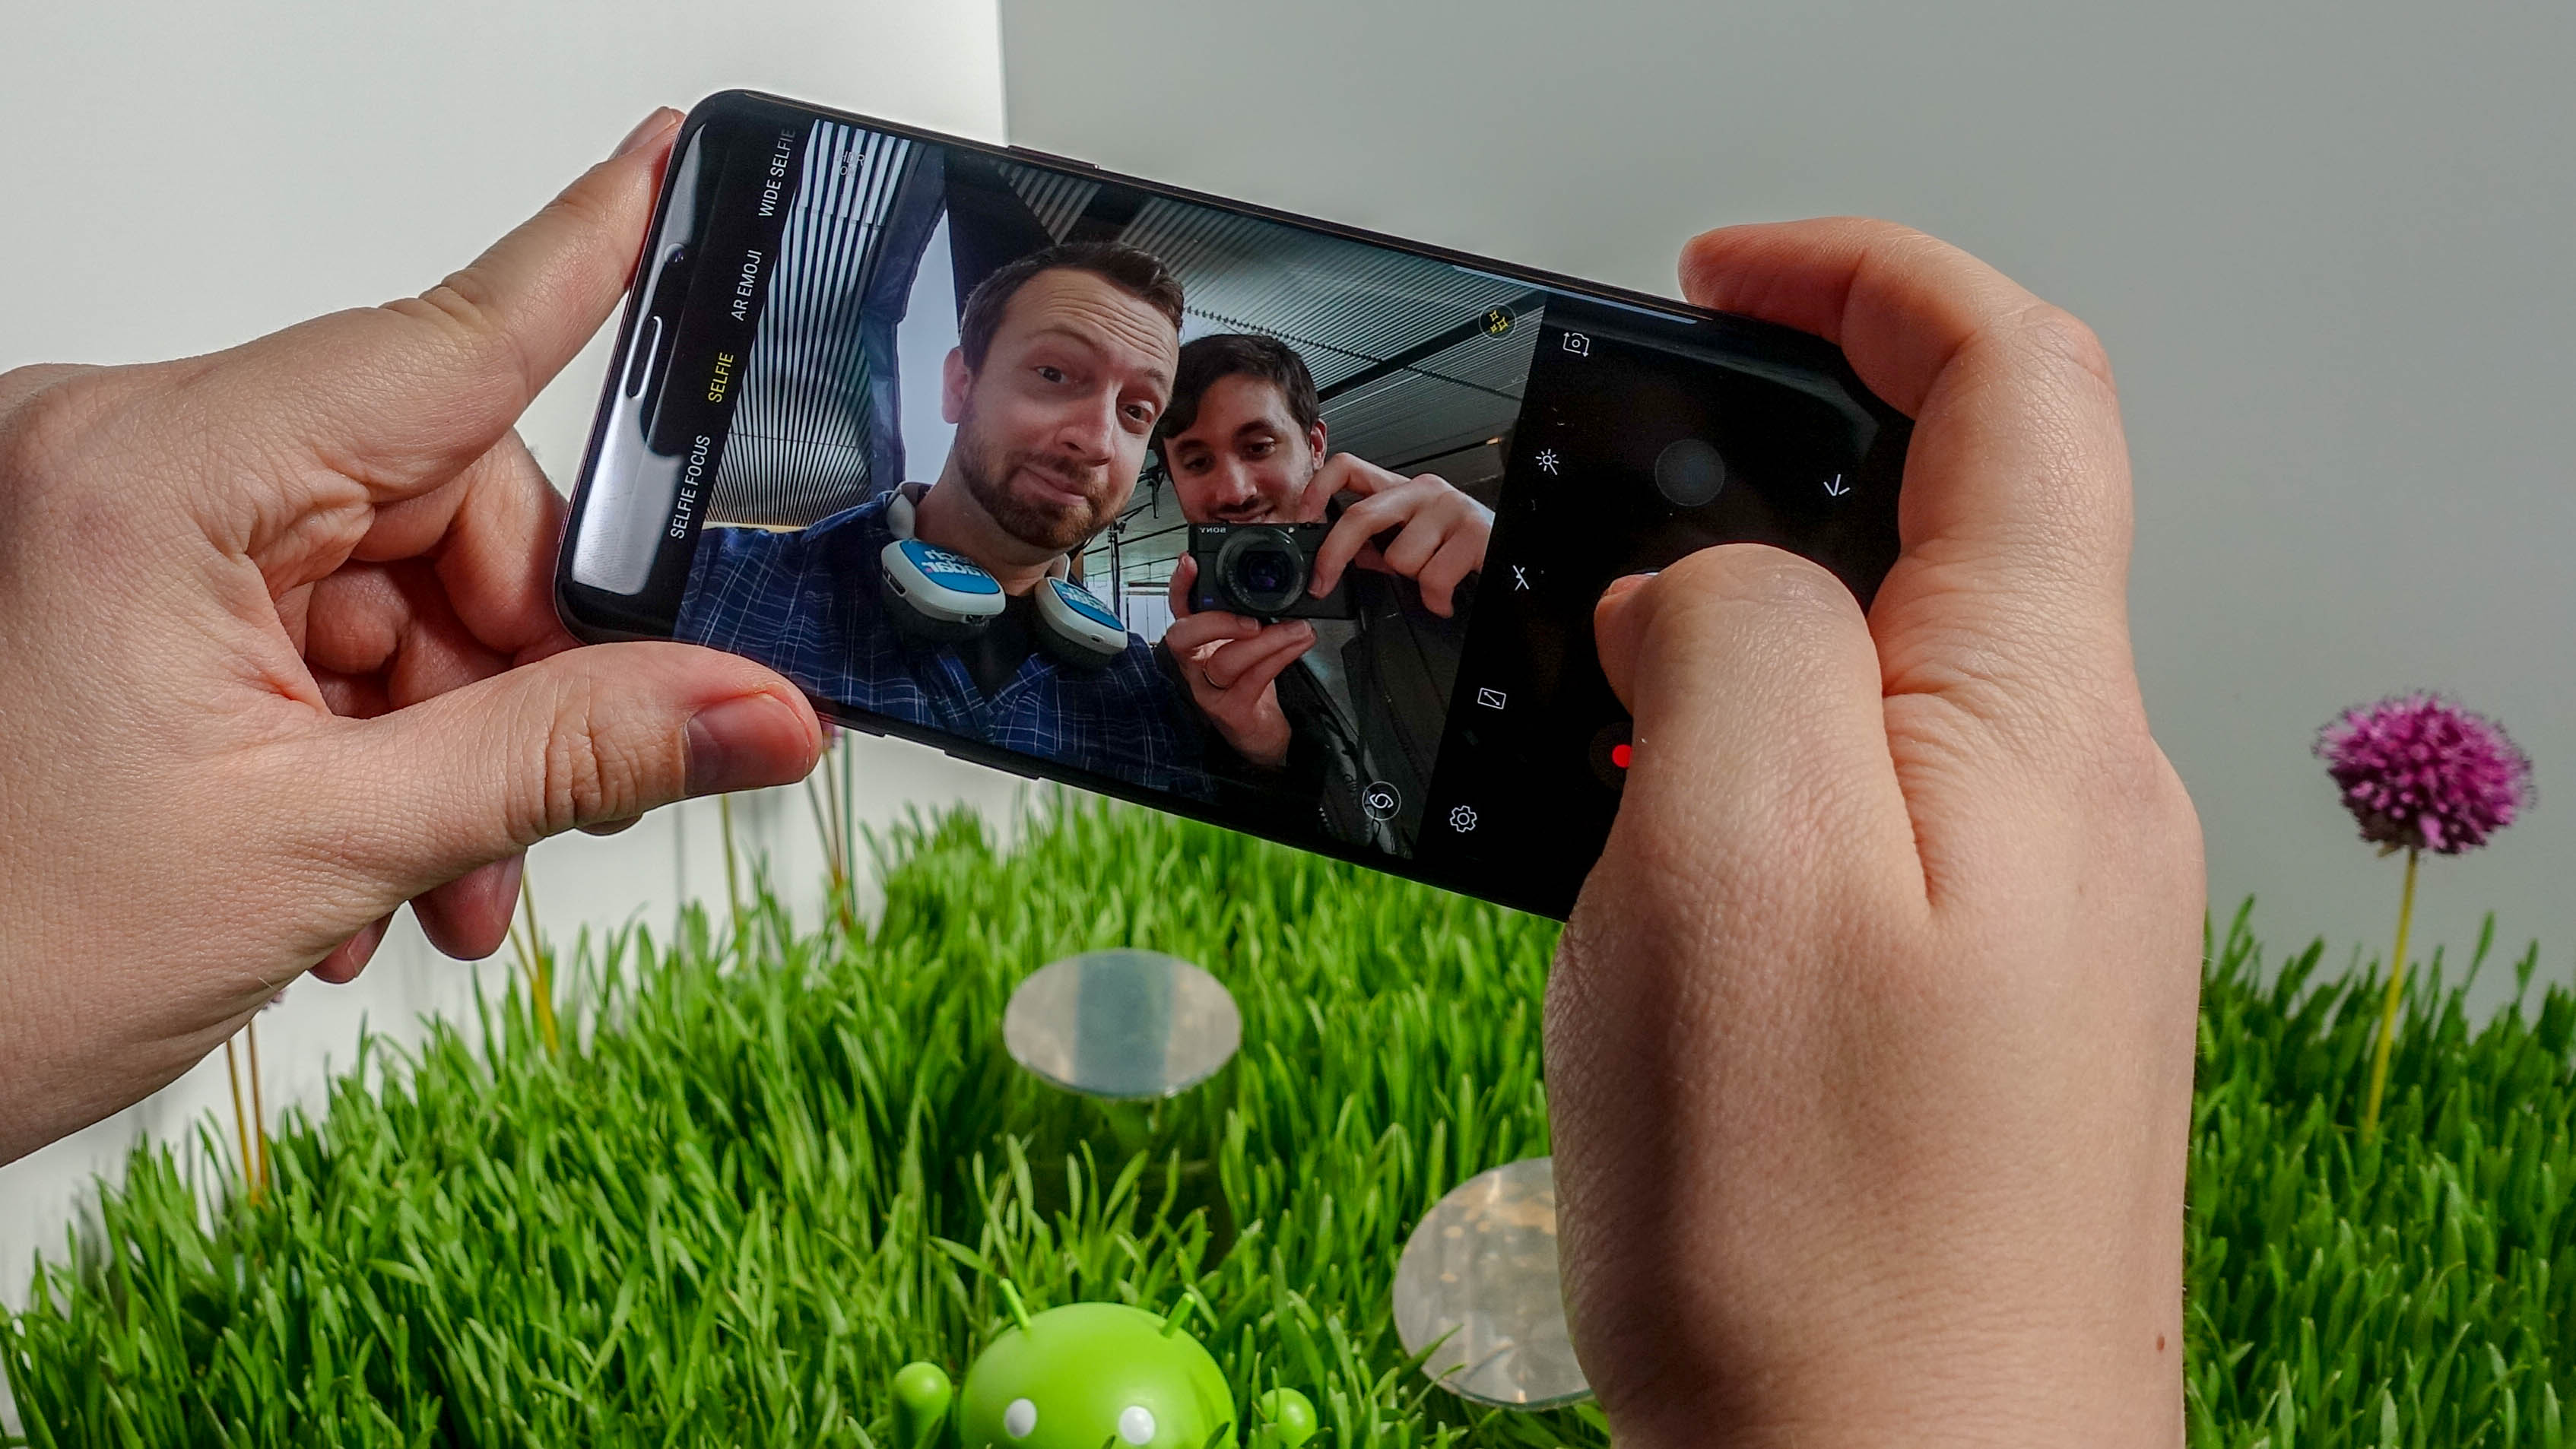 Camera And Battery Life Samsung Galaxy S9 Plus Review Techradar